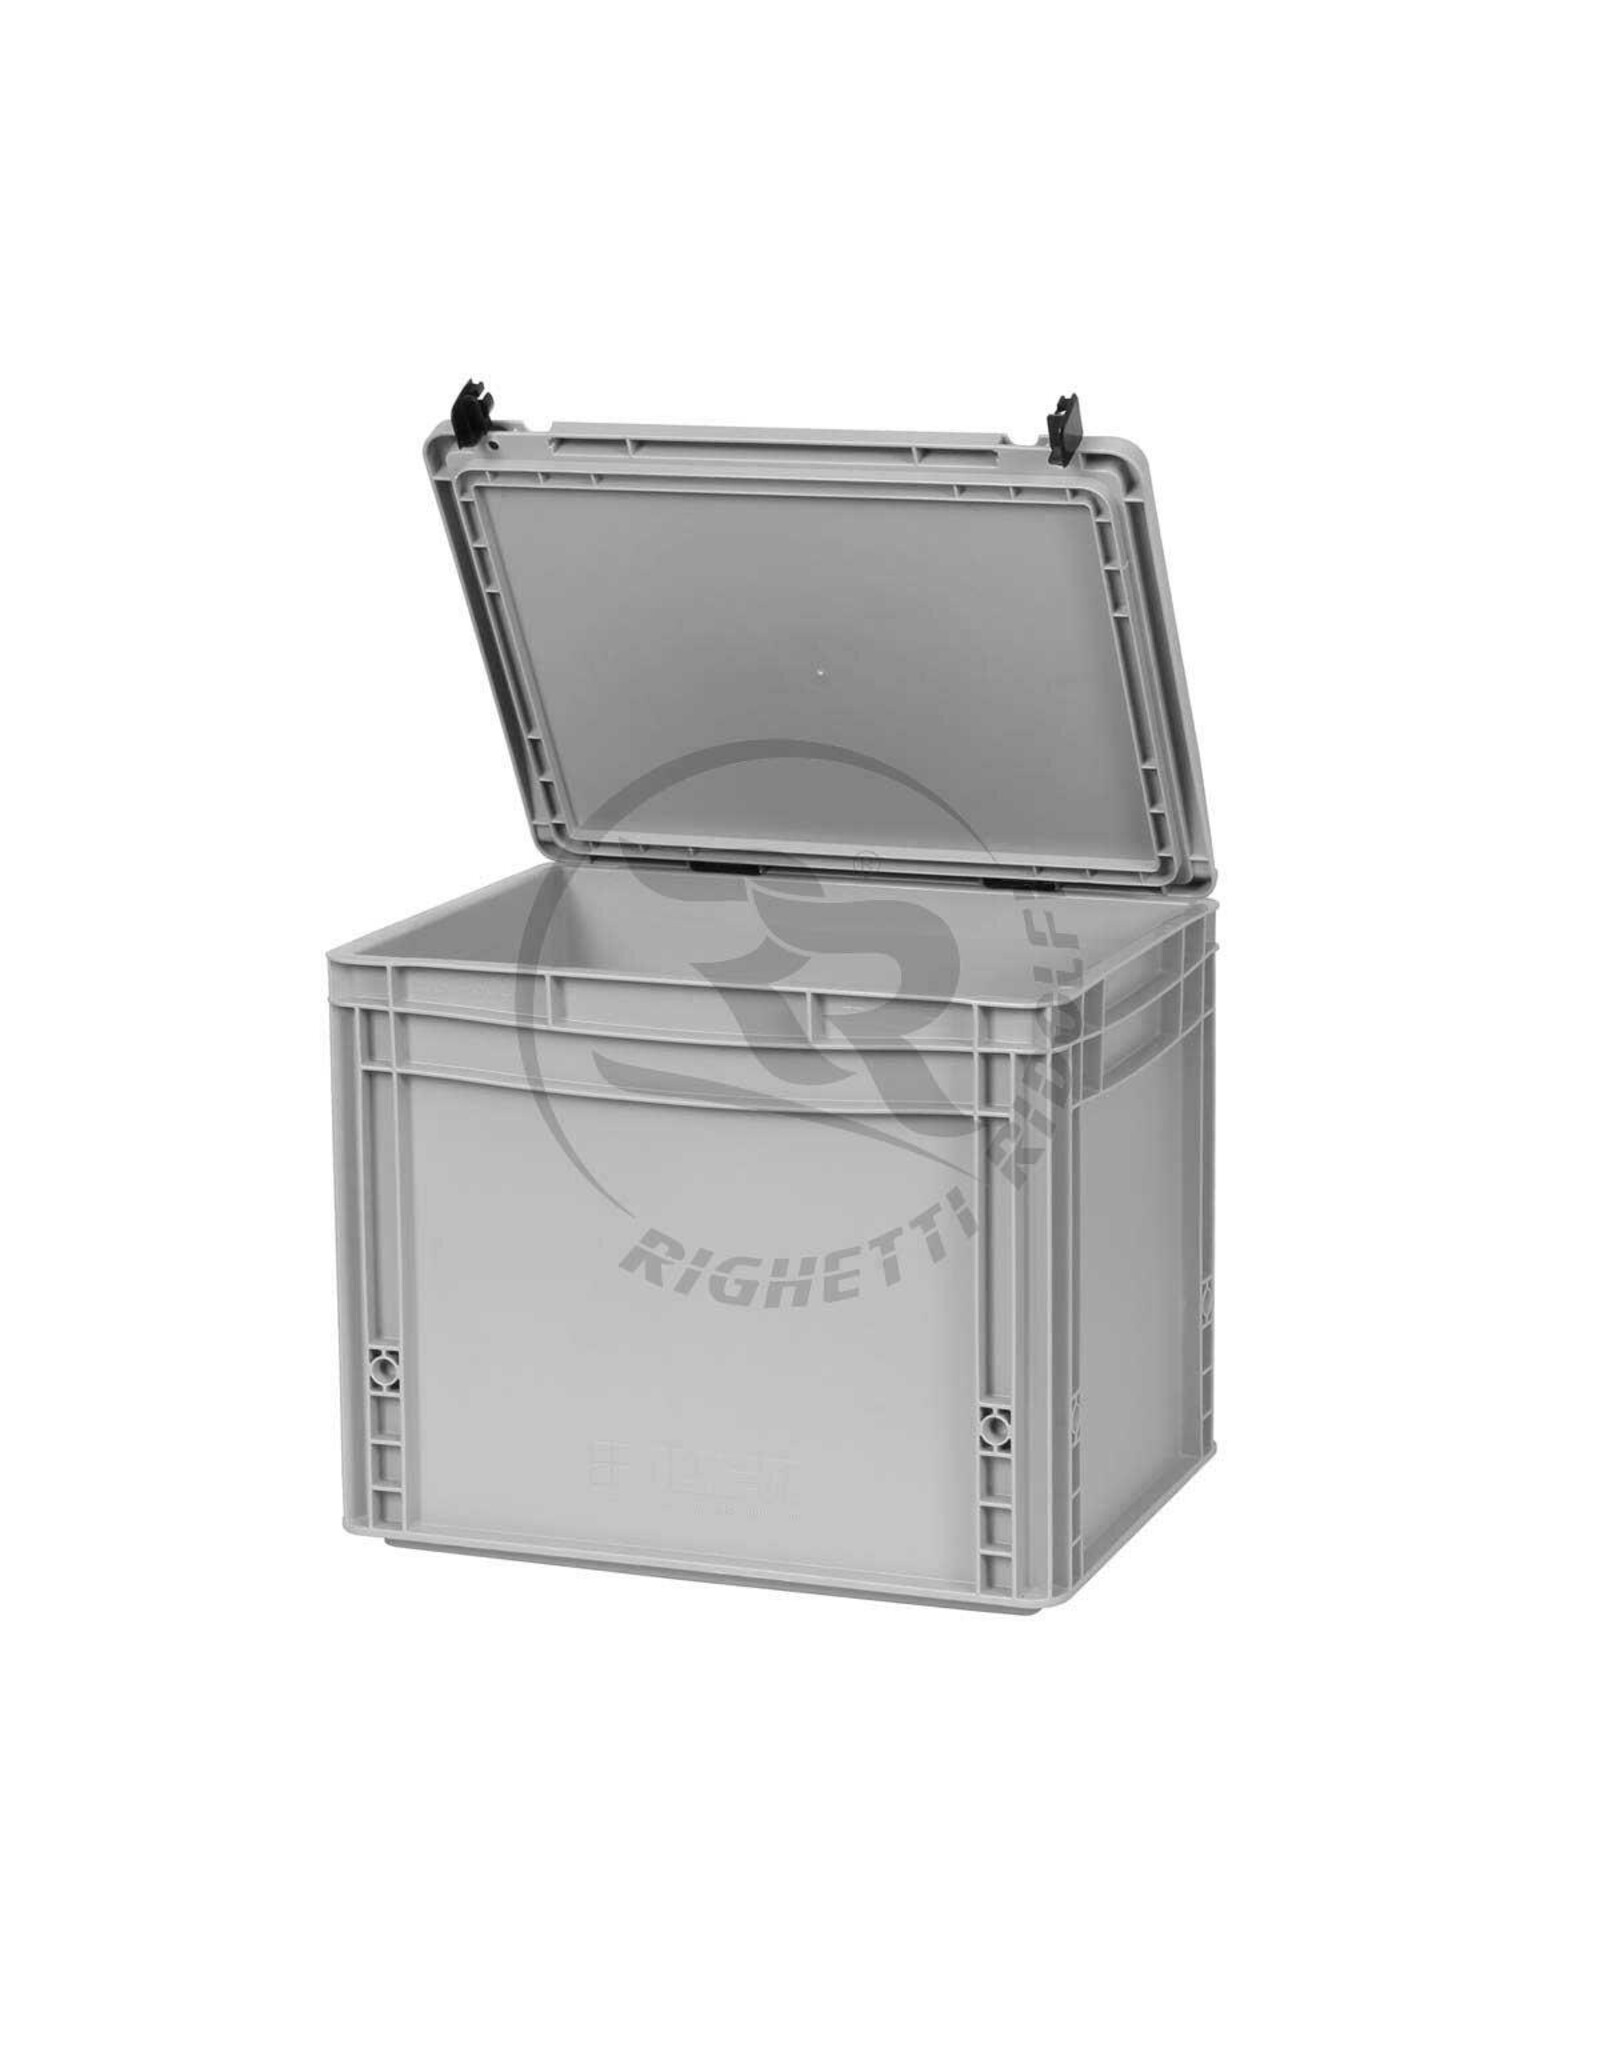 Righetti Ridolfi RR Opslag box plastic met sluitbare deksel binnen maten 37x27x19.7cm